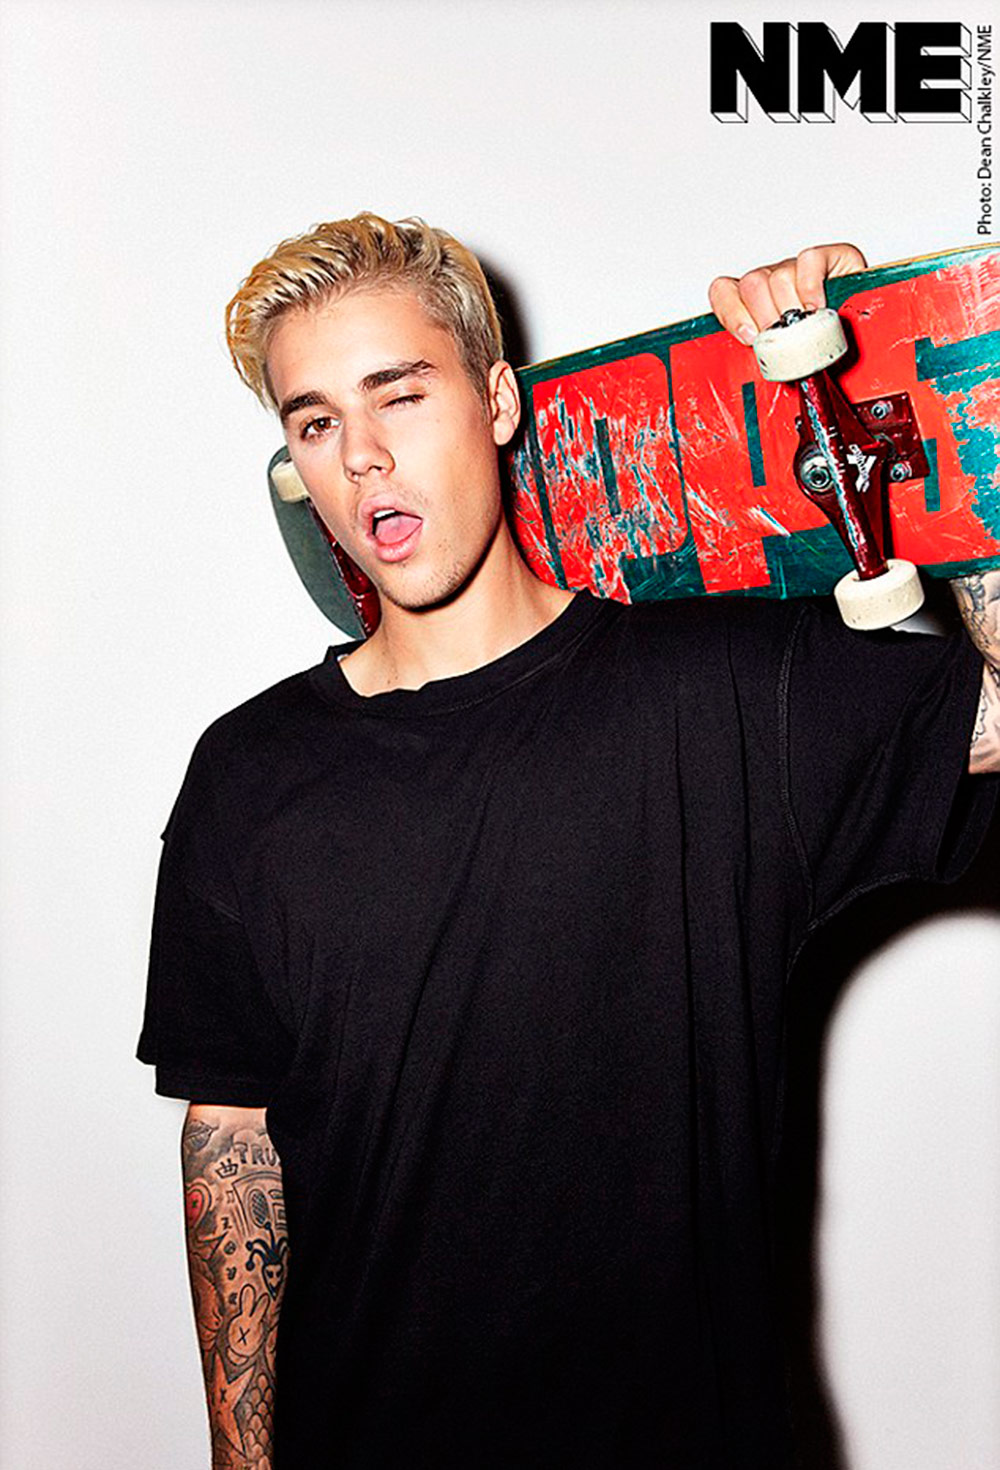 Justin Bieber 2015 NME Photo Shoot 001